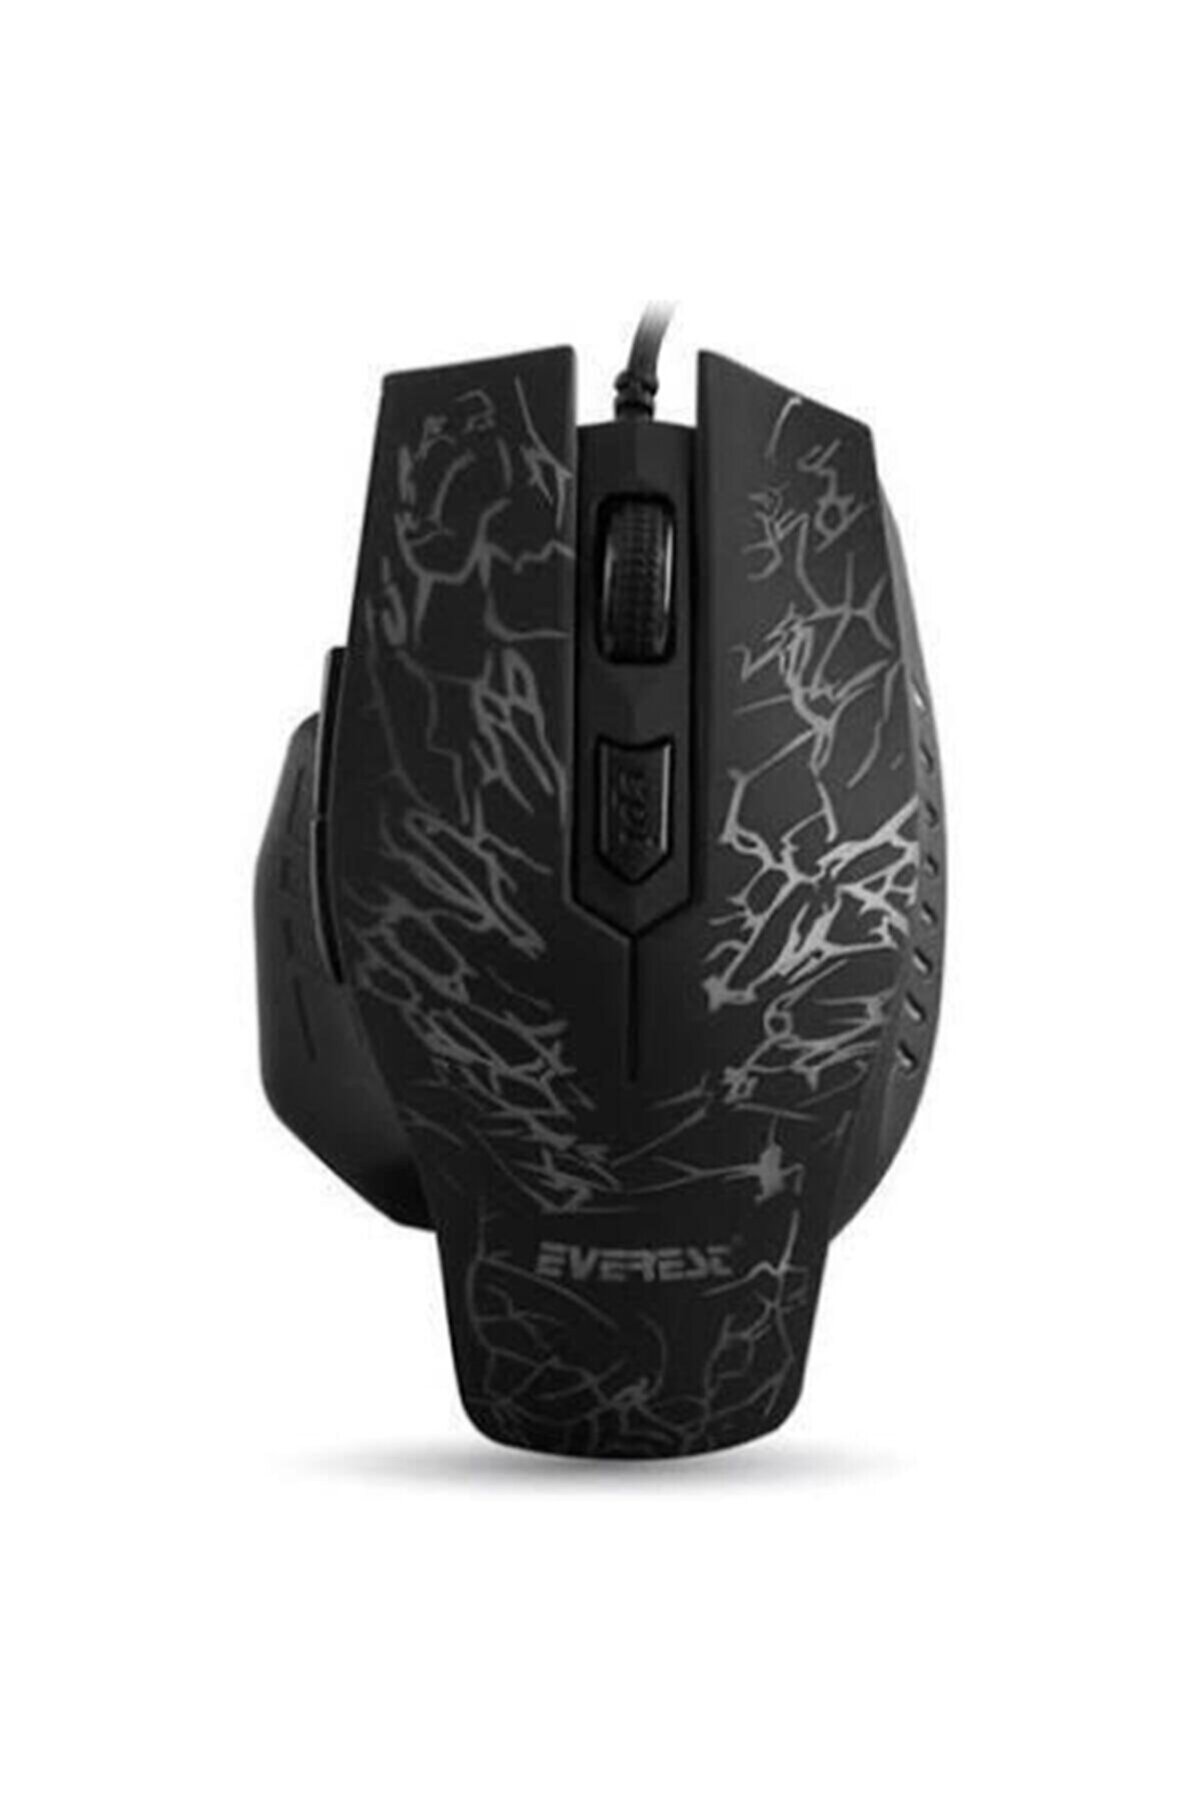 Everest Sm-700 Usb Siyah Oyuncu Mouse